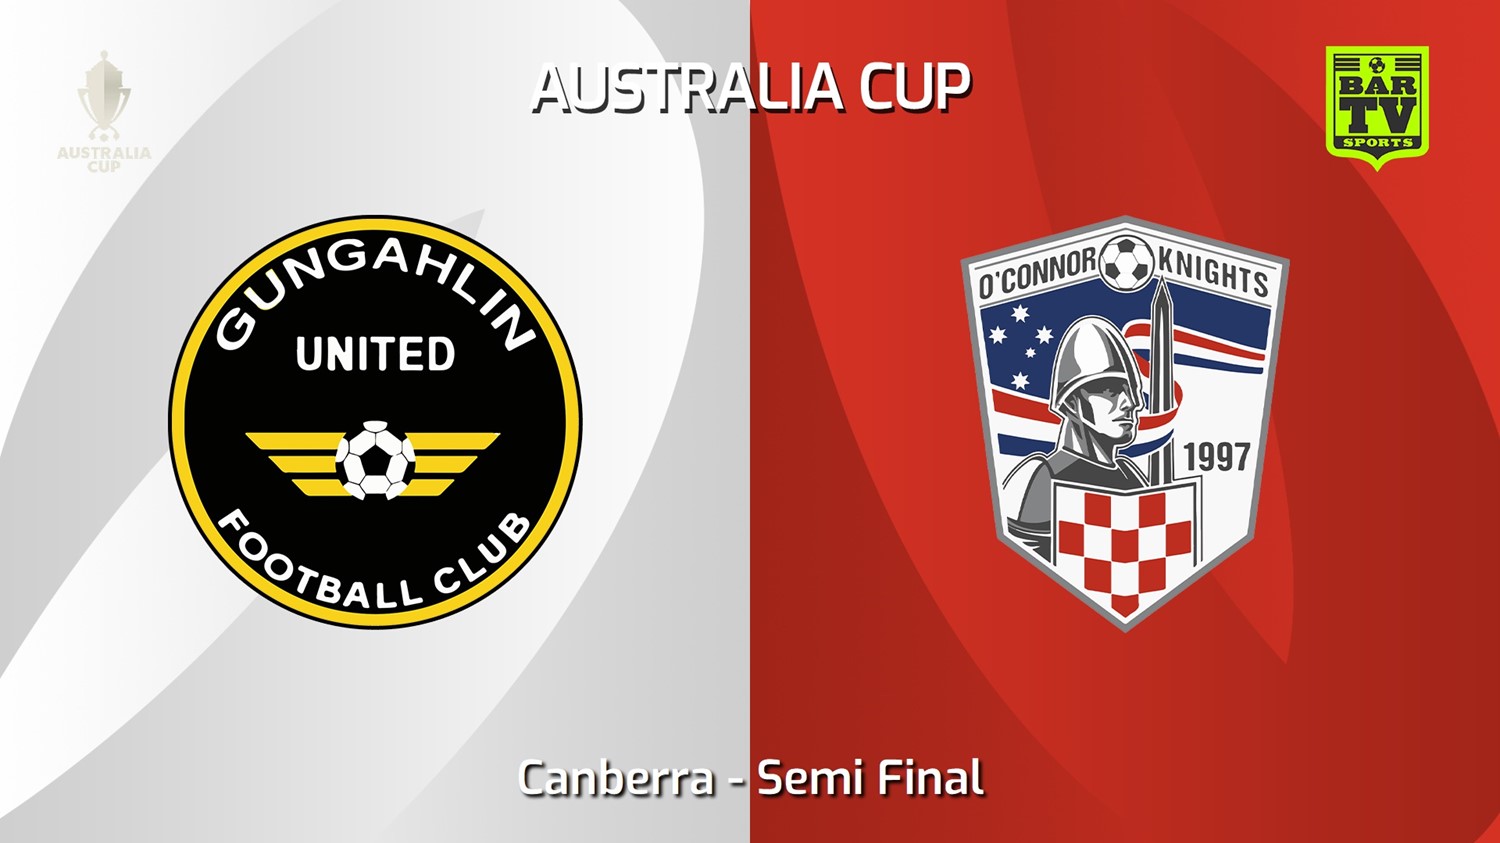 240521-video-Australia Cup Qualifying Canberra Semi Final - Gungahlin United v O'Connor Knights SC Minigame Slate Image